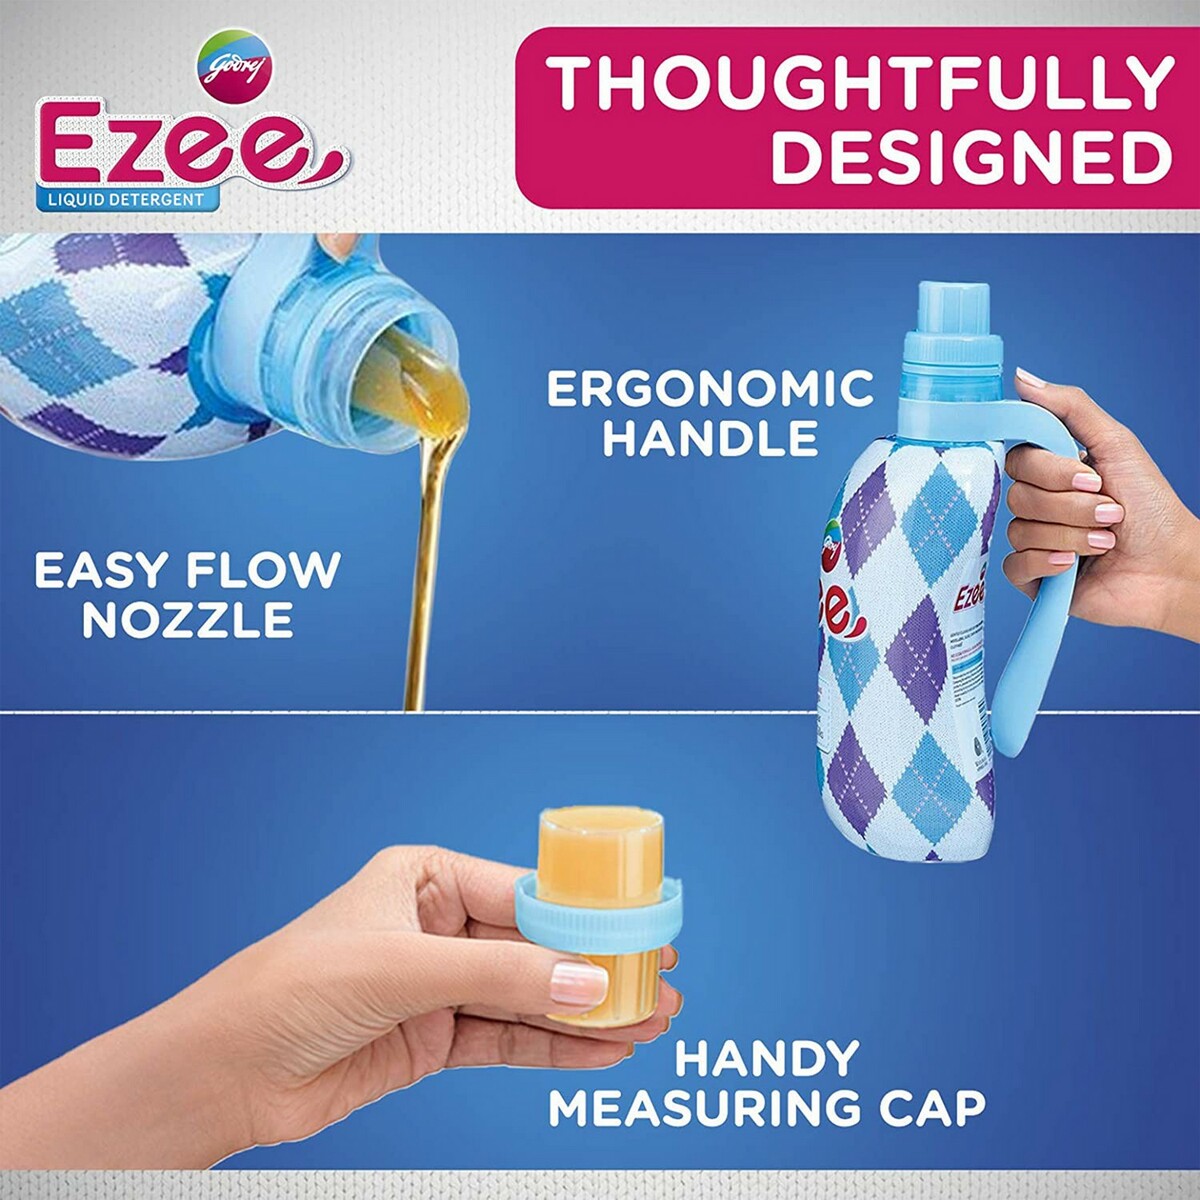 Ezee Winter Wash Liquid 200g